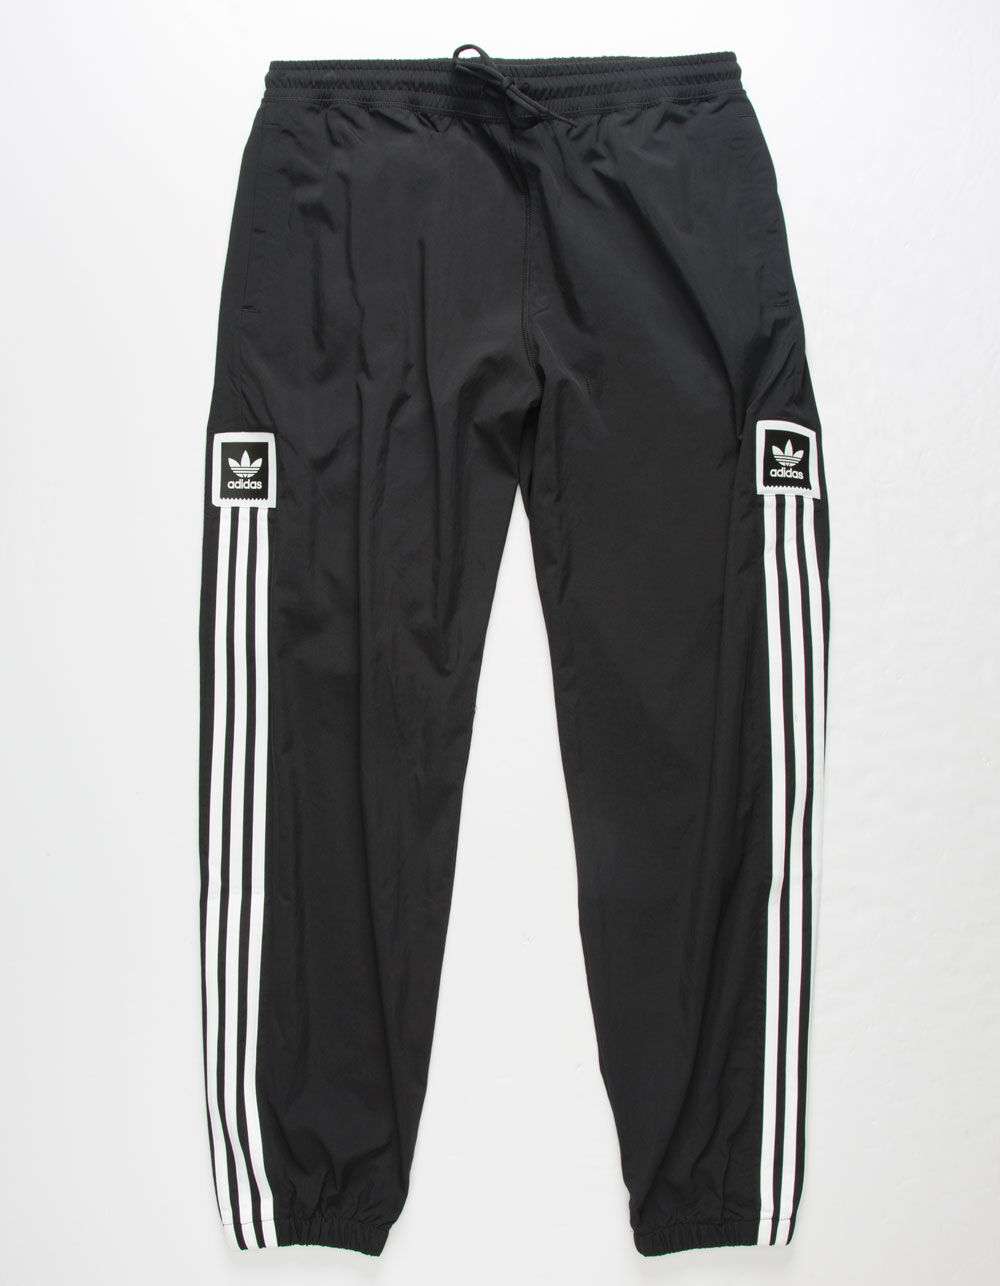 Shop adidas Wind Pants IS2146 black